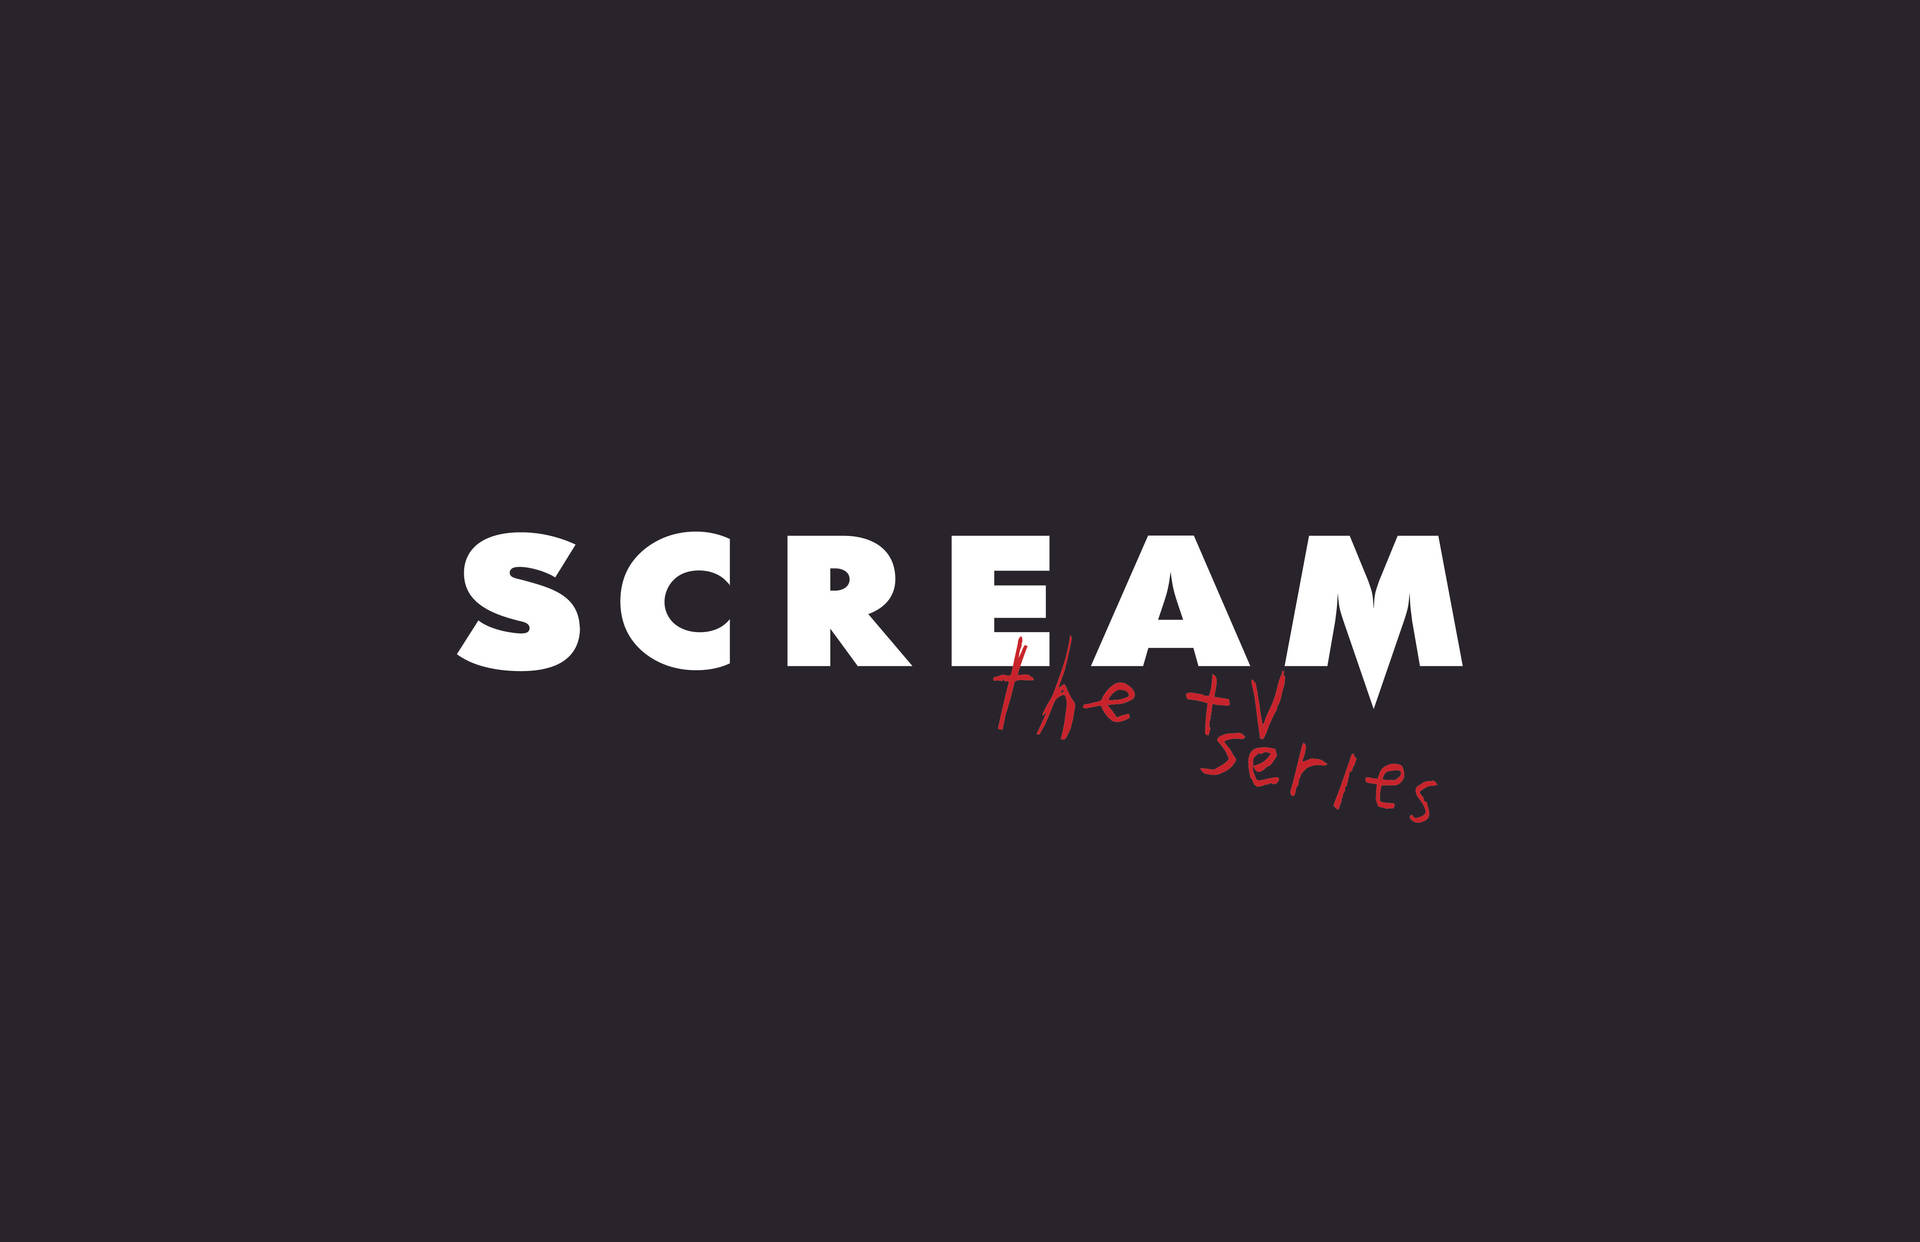 Scream The Tv Series Background